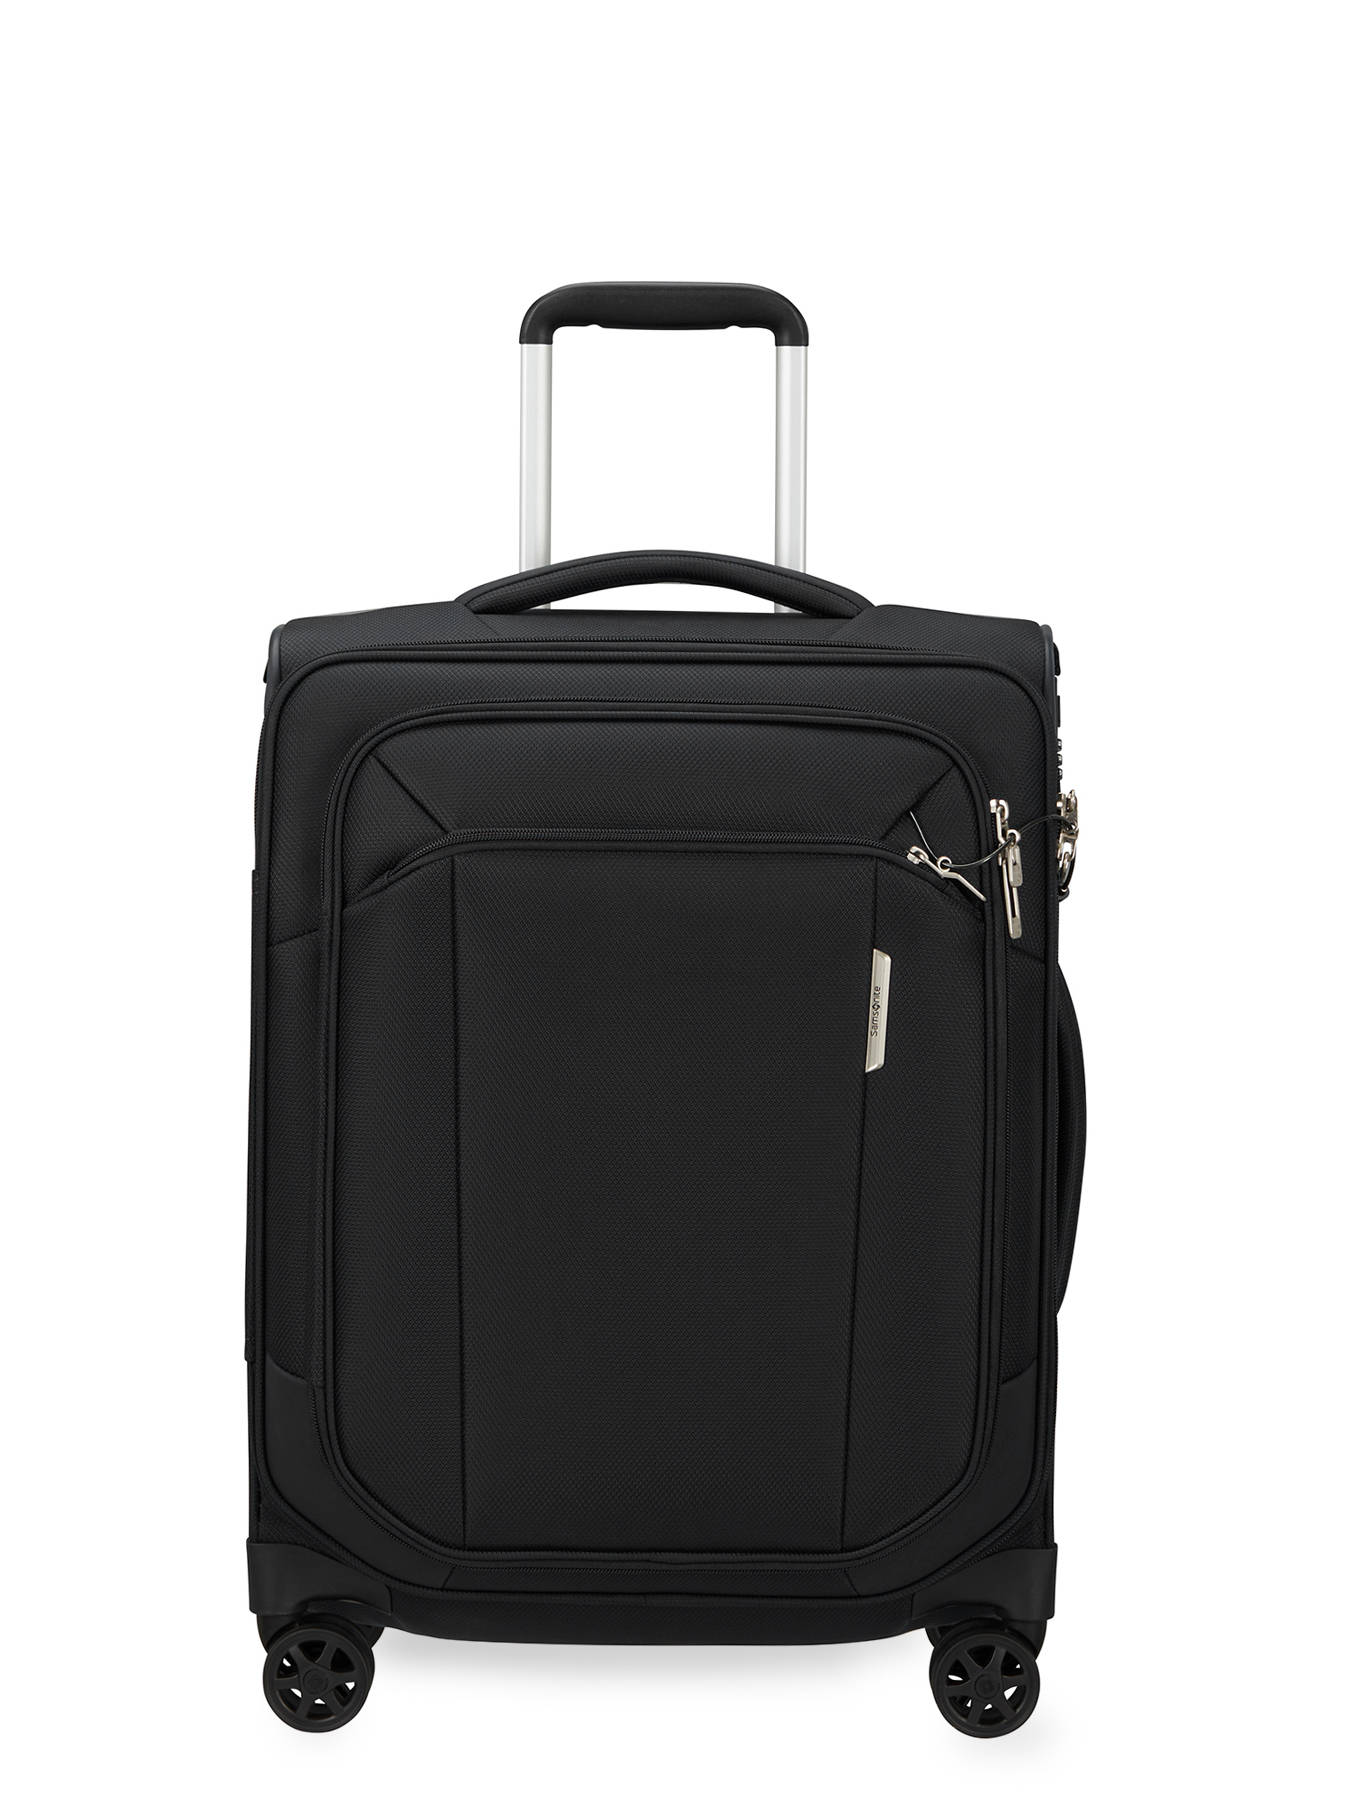 Samsonite Carry-on-suitcase 143328 / KJ3004 - best prices